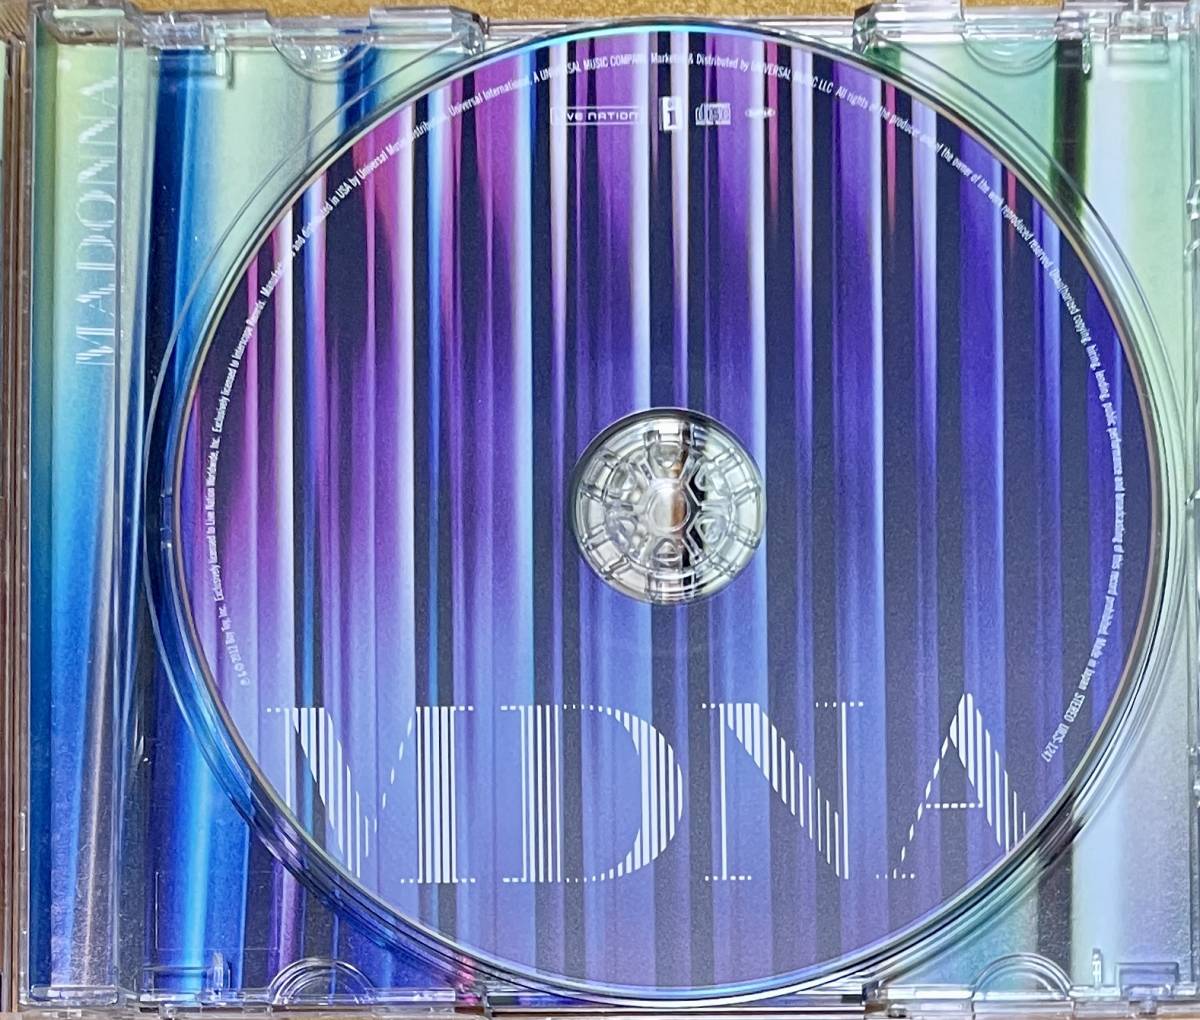 69b Madonna MDNA 国内盤 ライナー 帯 Bonus Track付 OBI Electronic Europop Dance-pop Vocal Dance Disco House 中古品_画像3